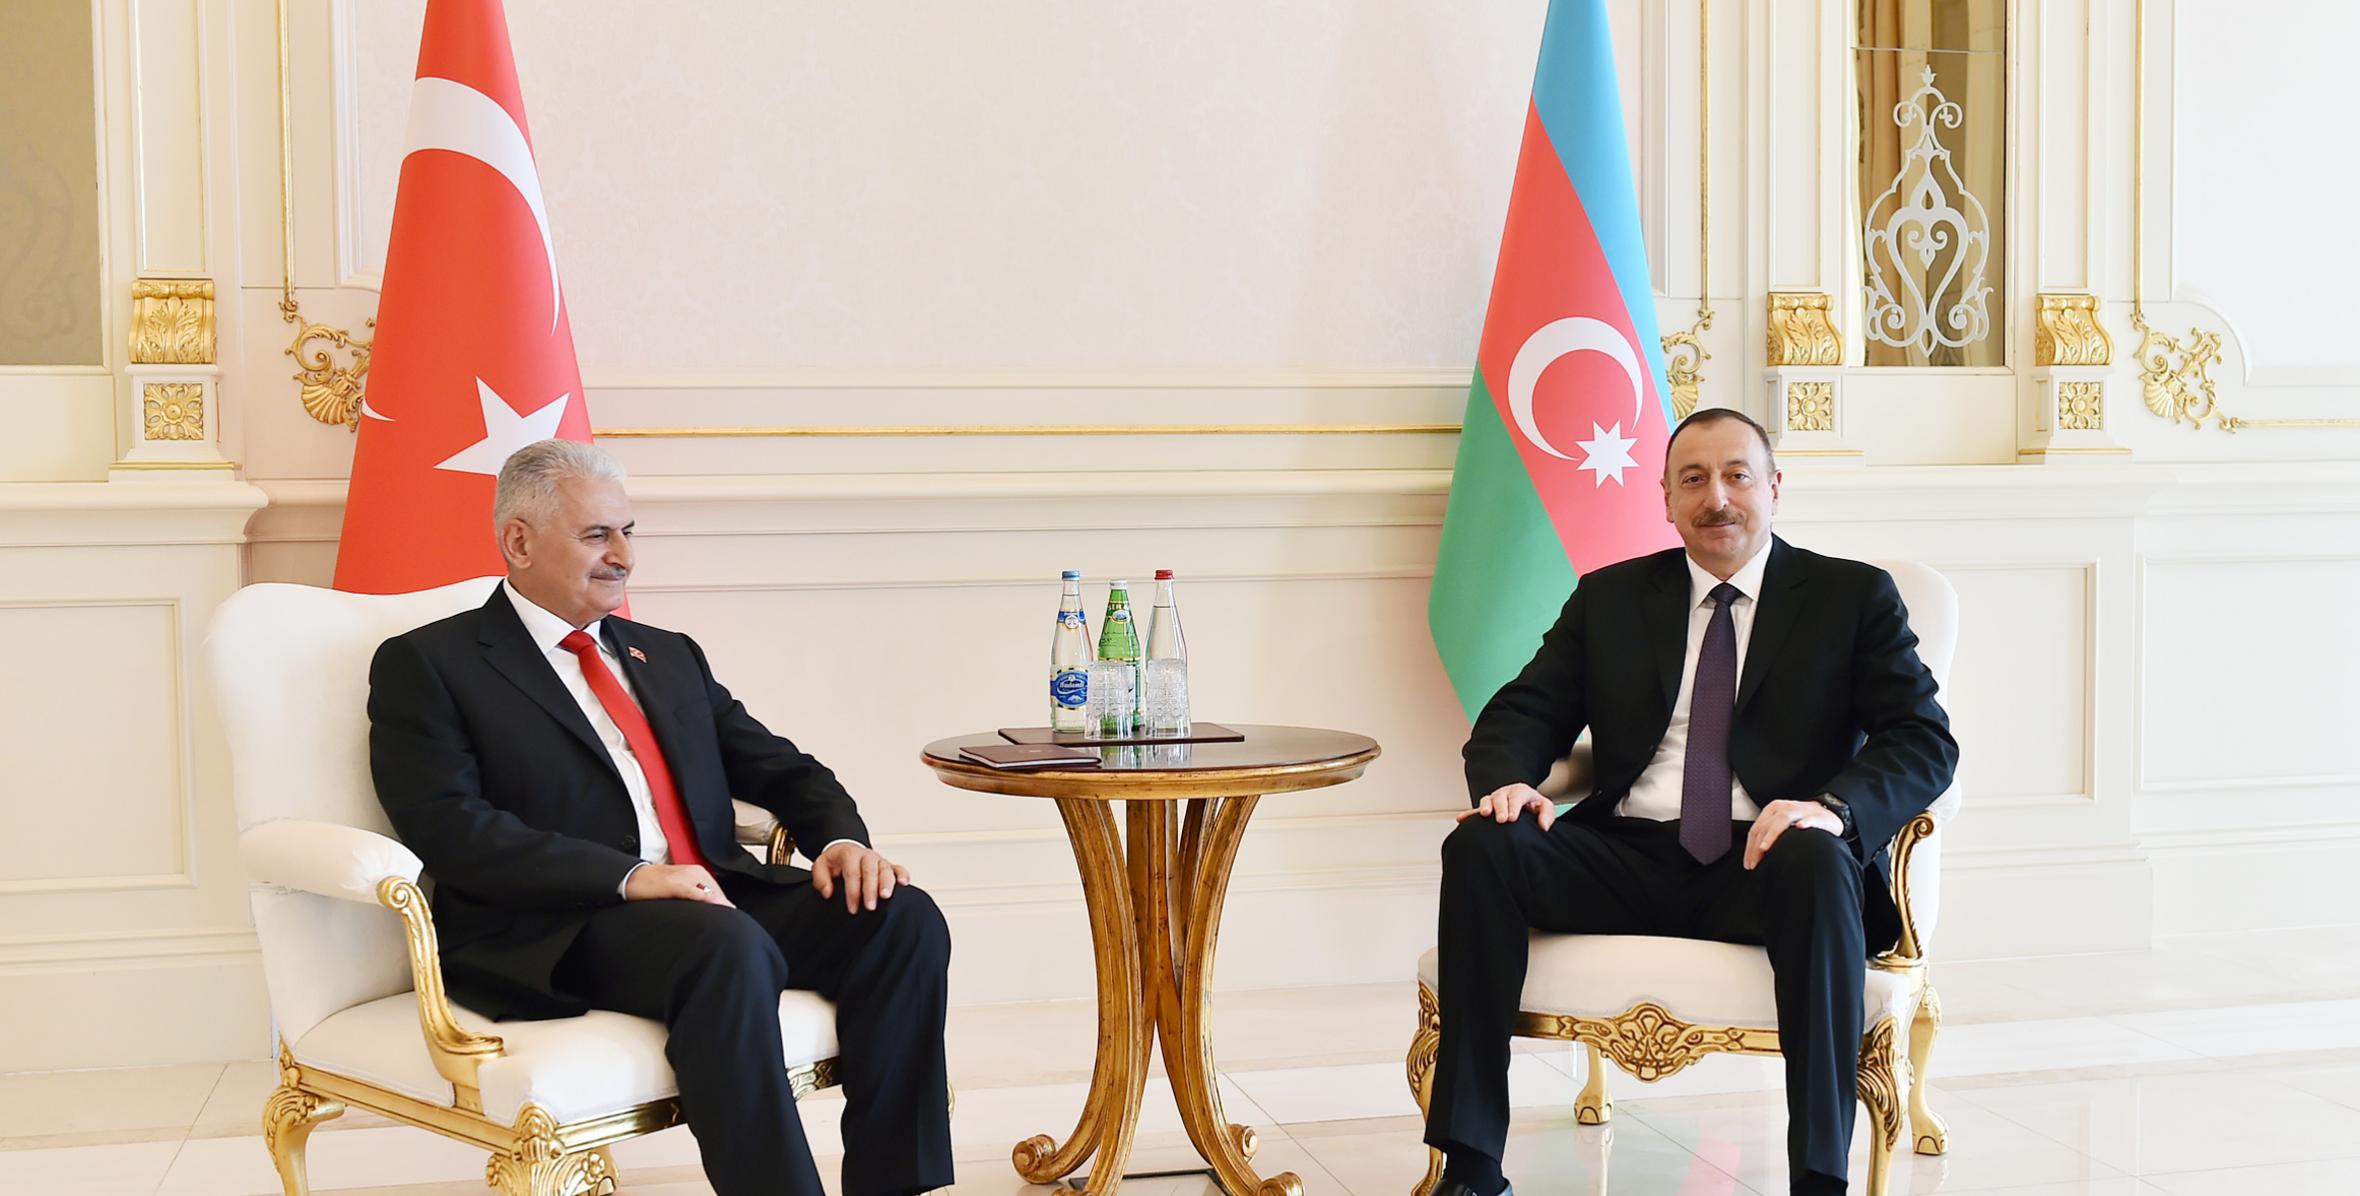 Ilham Aliyev and Turkish Prime Minister Binali Yildirim held a one-on-one meeting